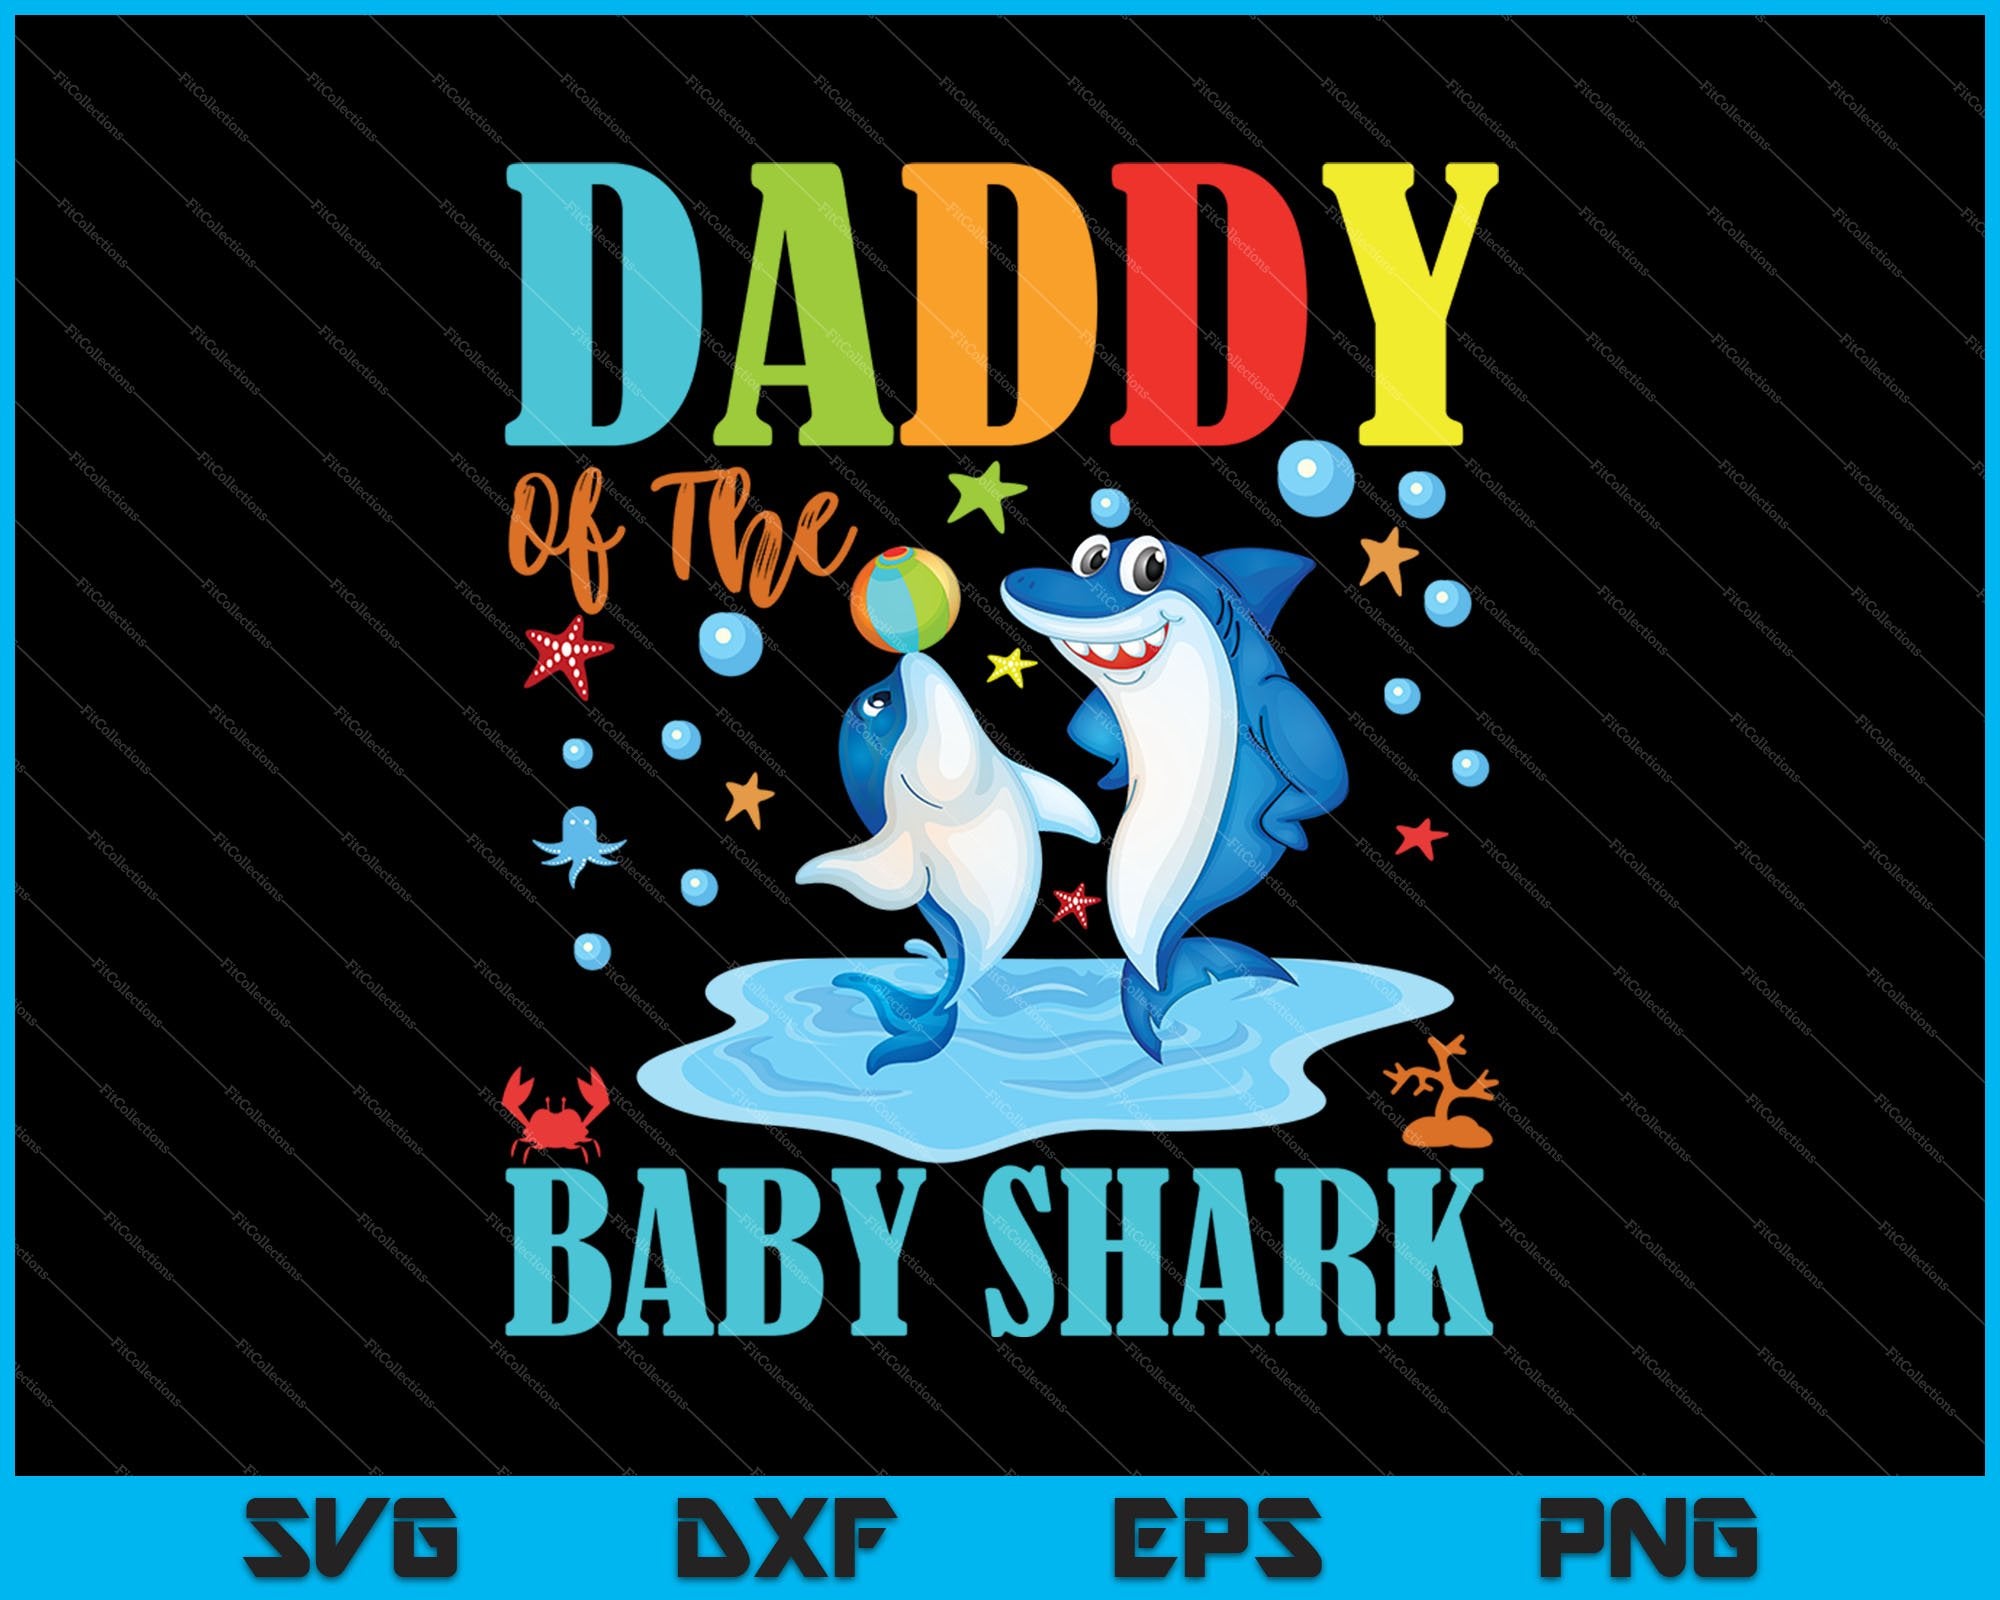 Free Free Grandpa Shark Svg 430 SVG PNG EPS DXF File